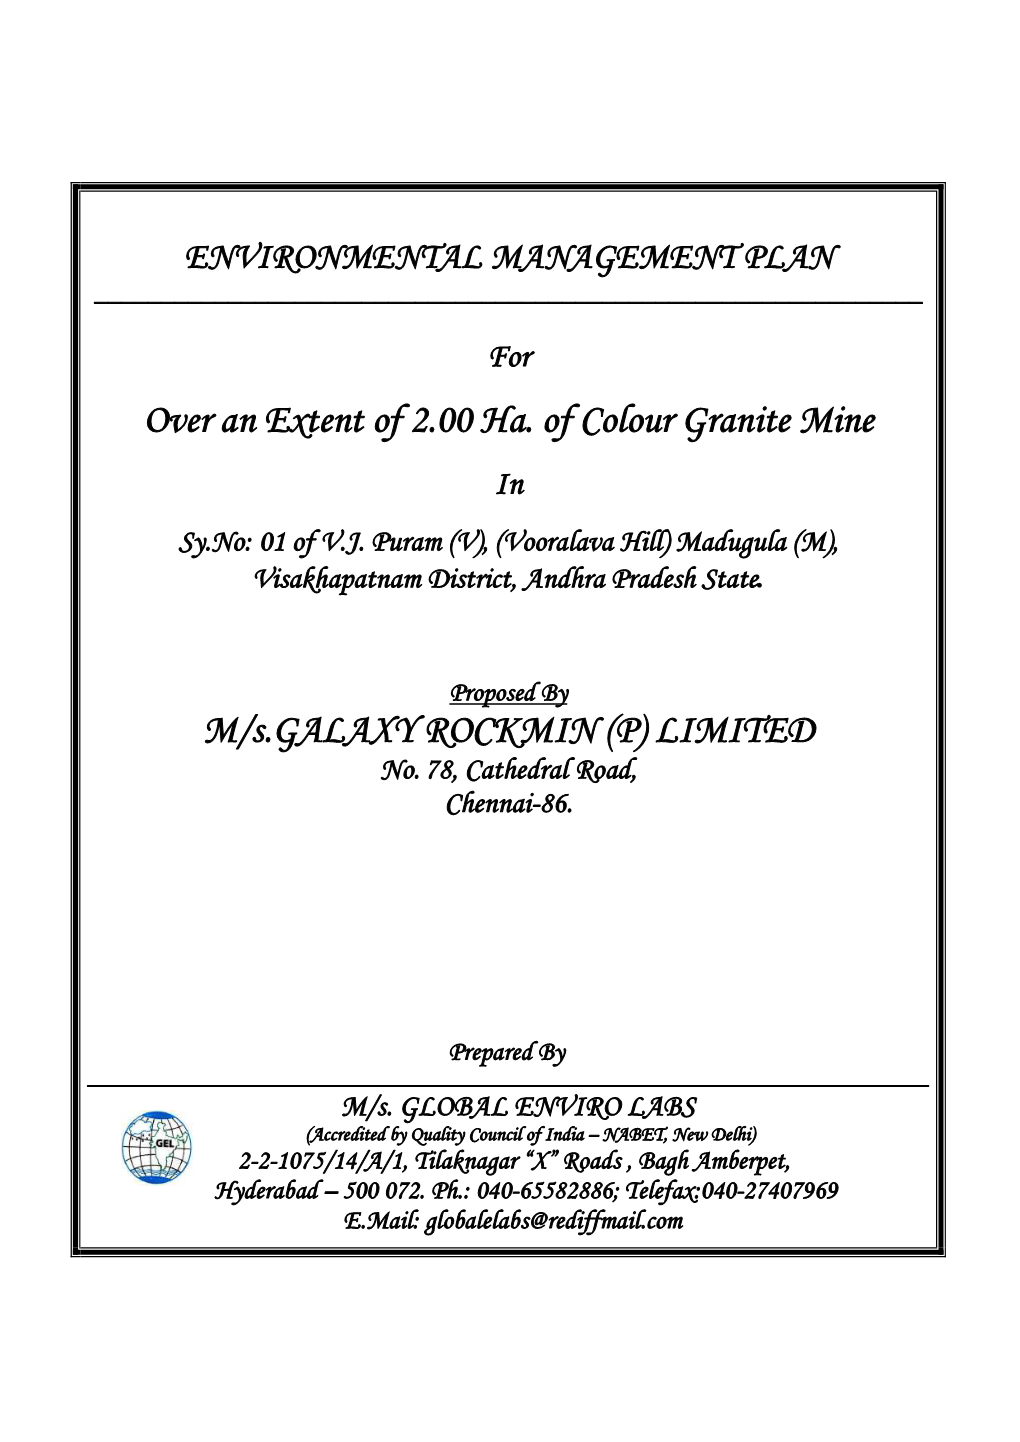 Over an Extent of 2.00 Ha. of Colour Granite Mine M/S.GALAXY ROCKMIN